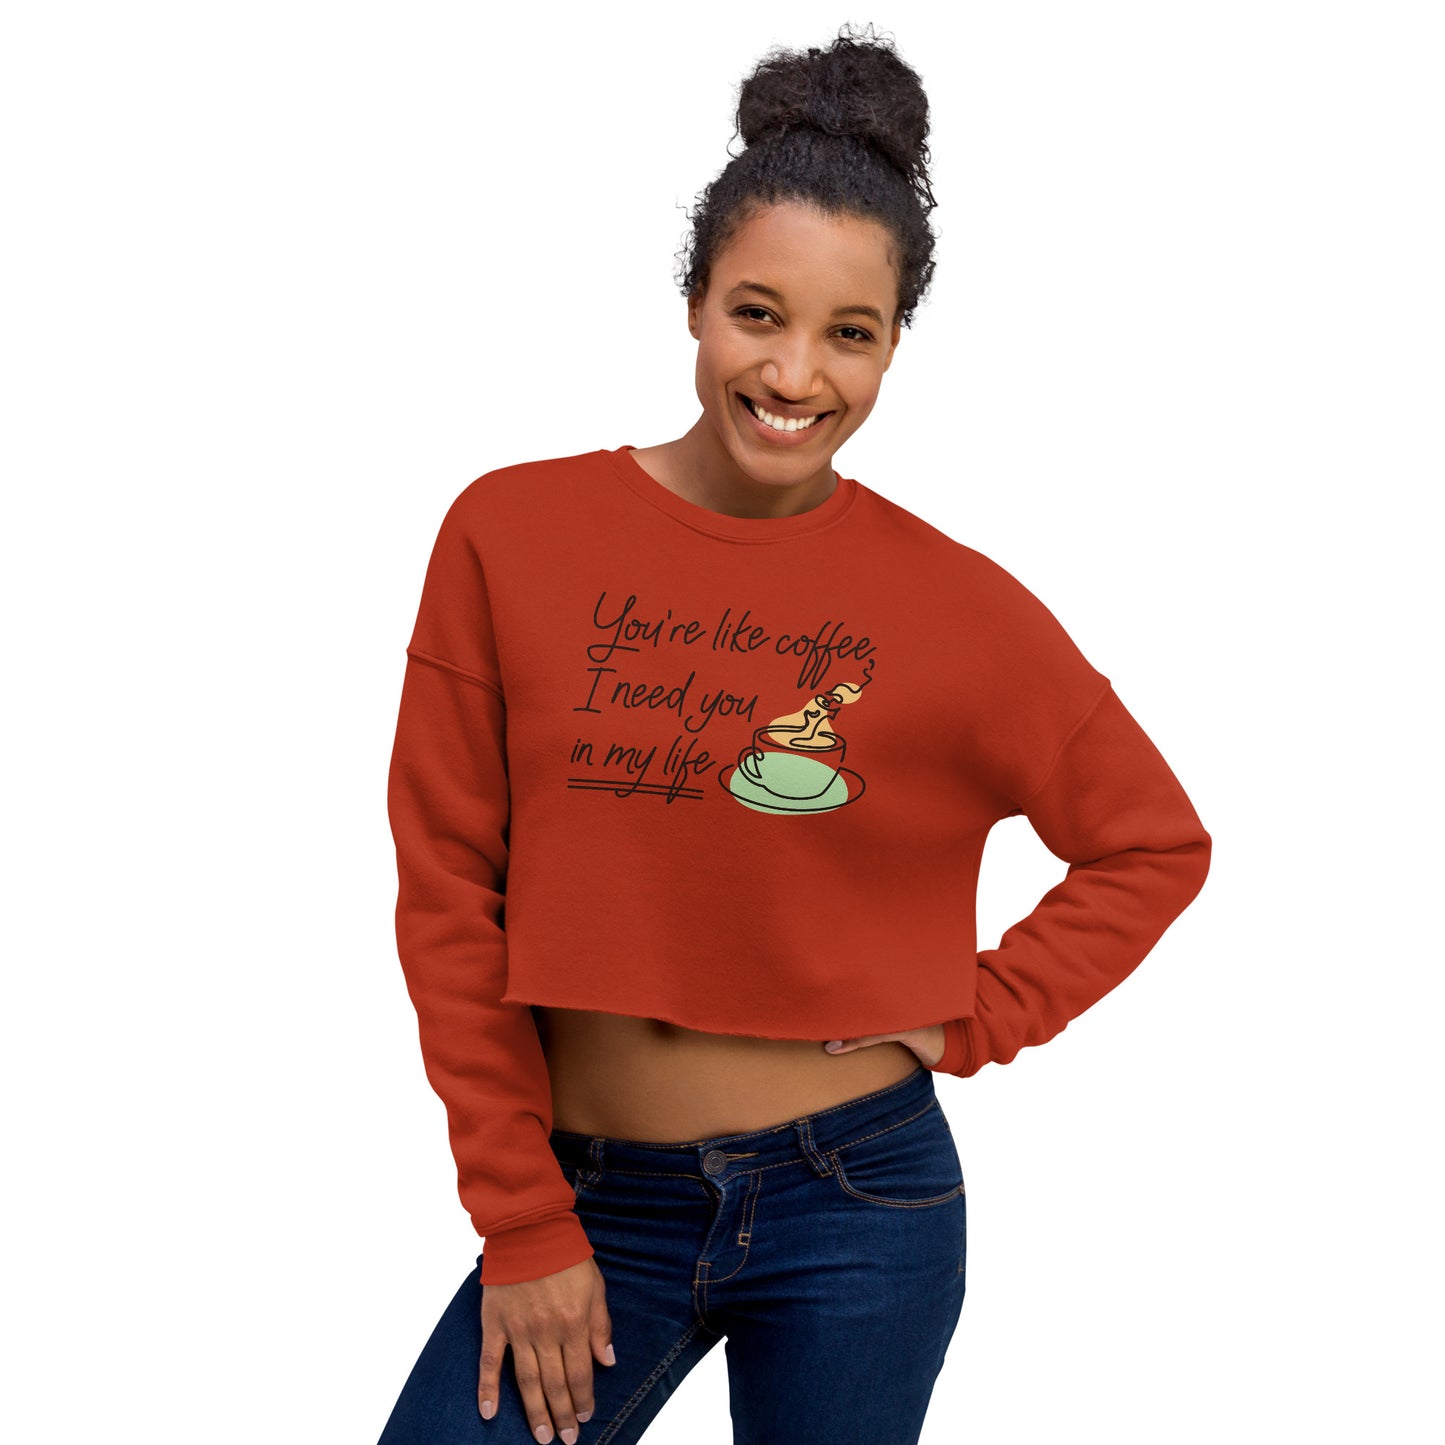 Crop Sweatshirt Womens (You're Like Coffee, I Need You In My Life - Inspiration 0018)